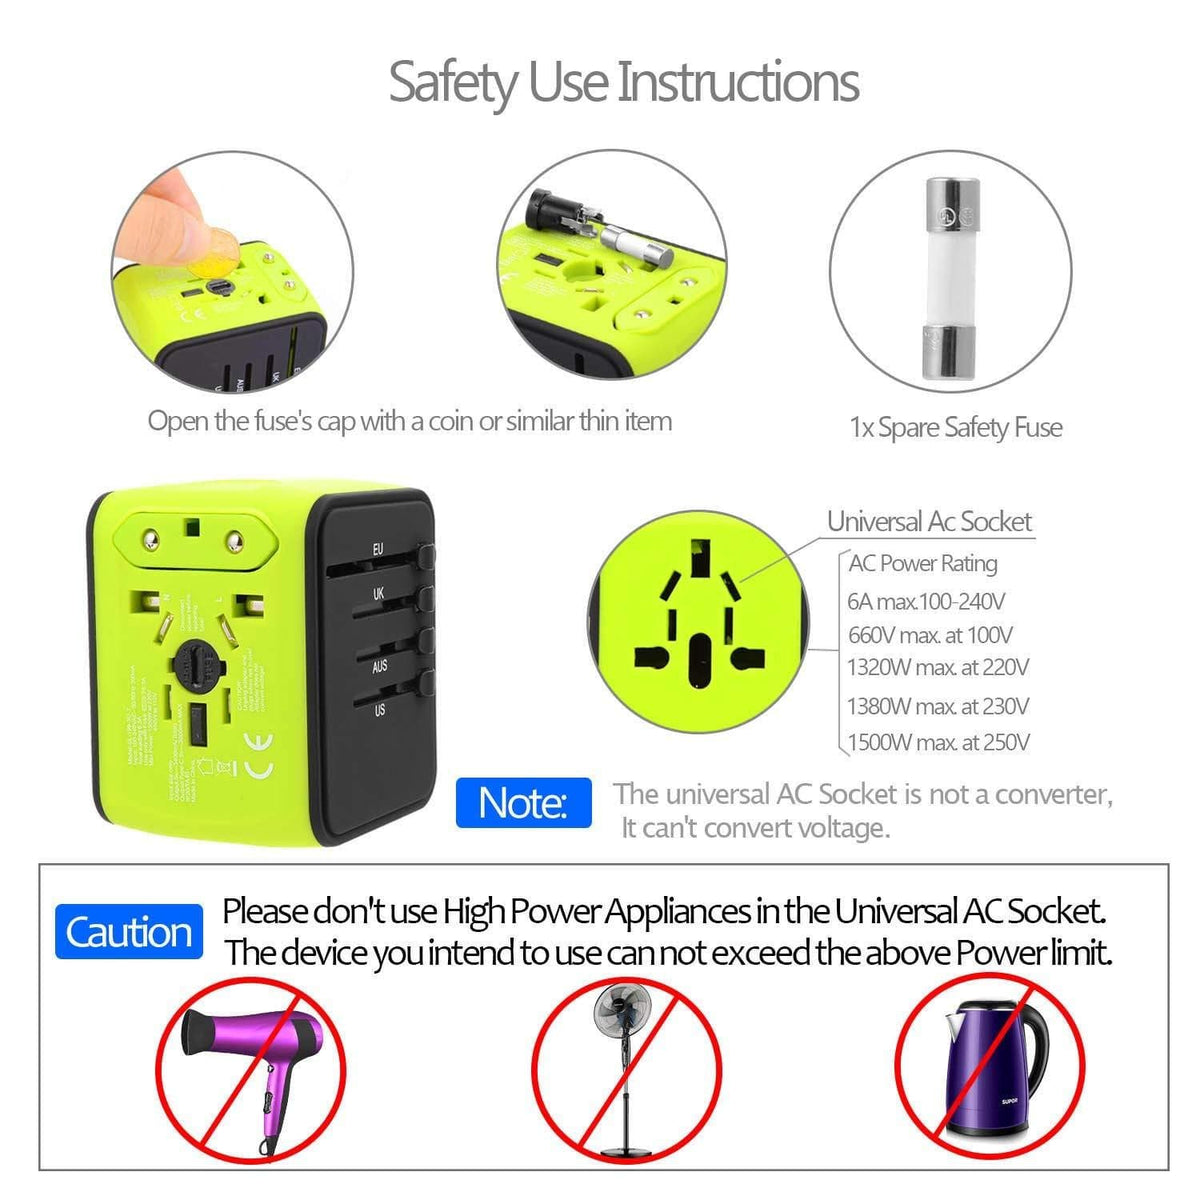 LONGET Official Store International Plug Adaptor Travel Adapter